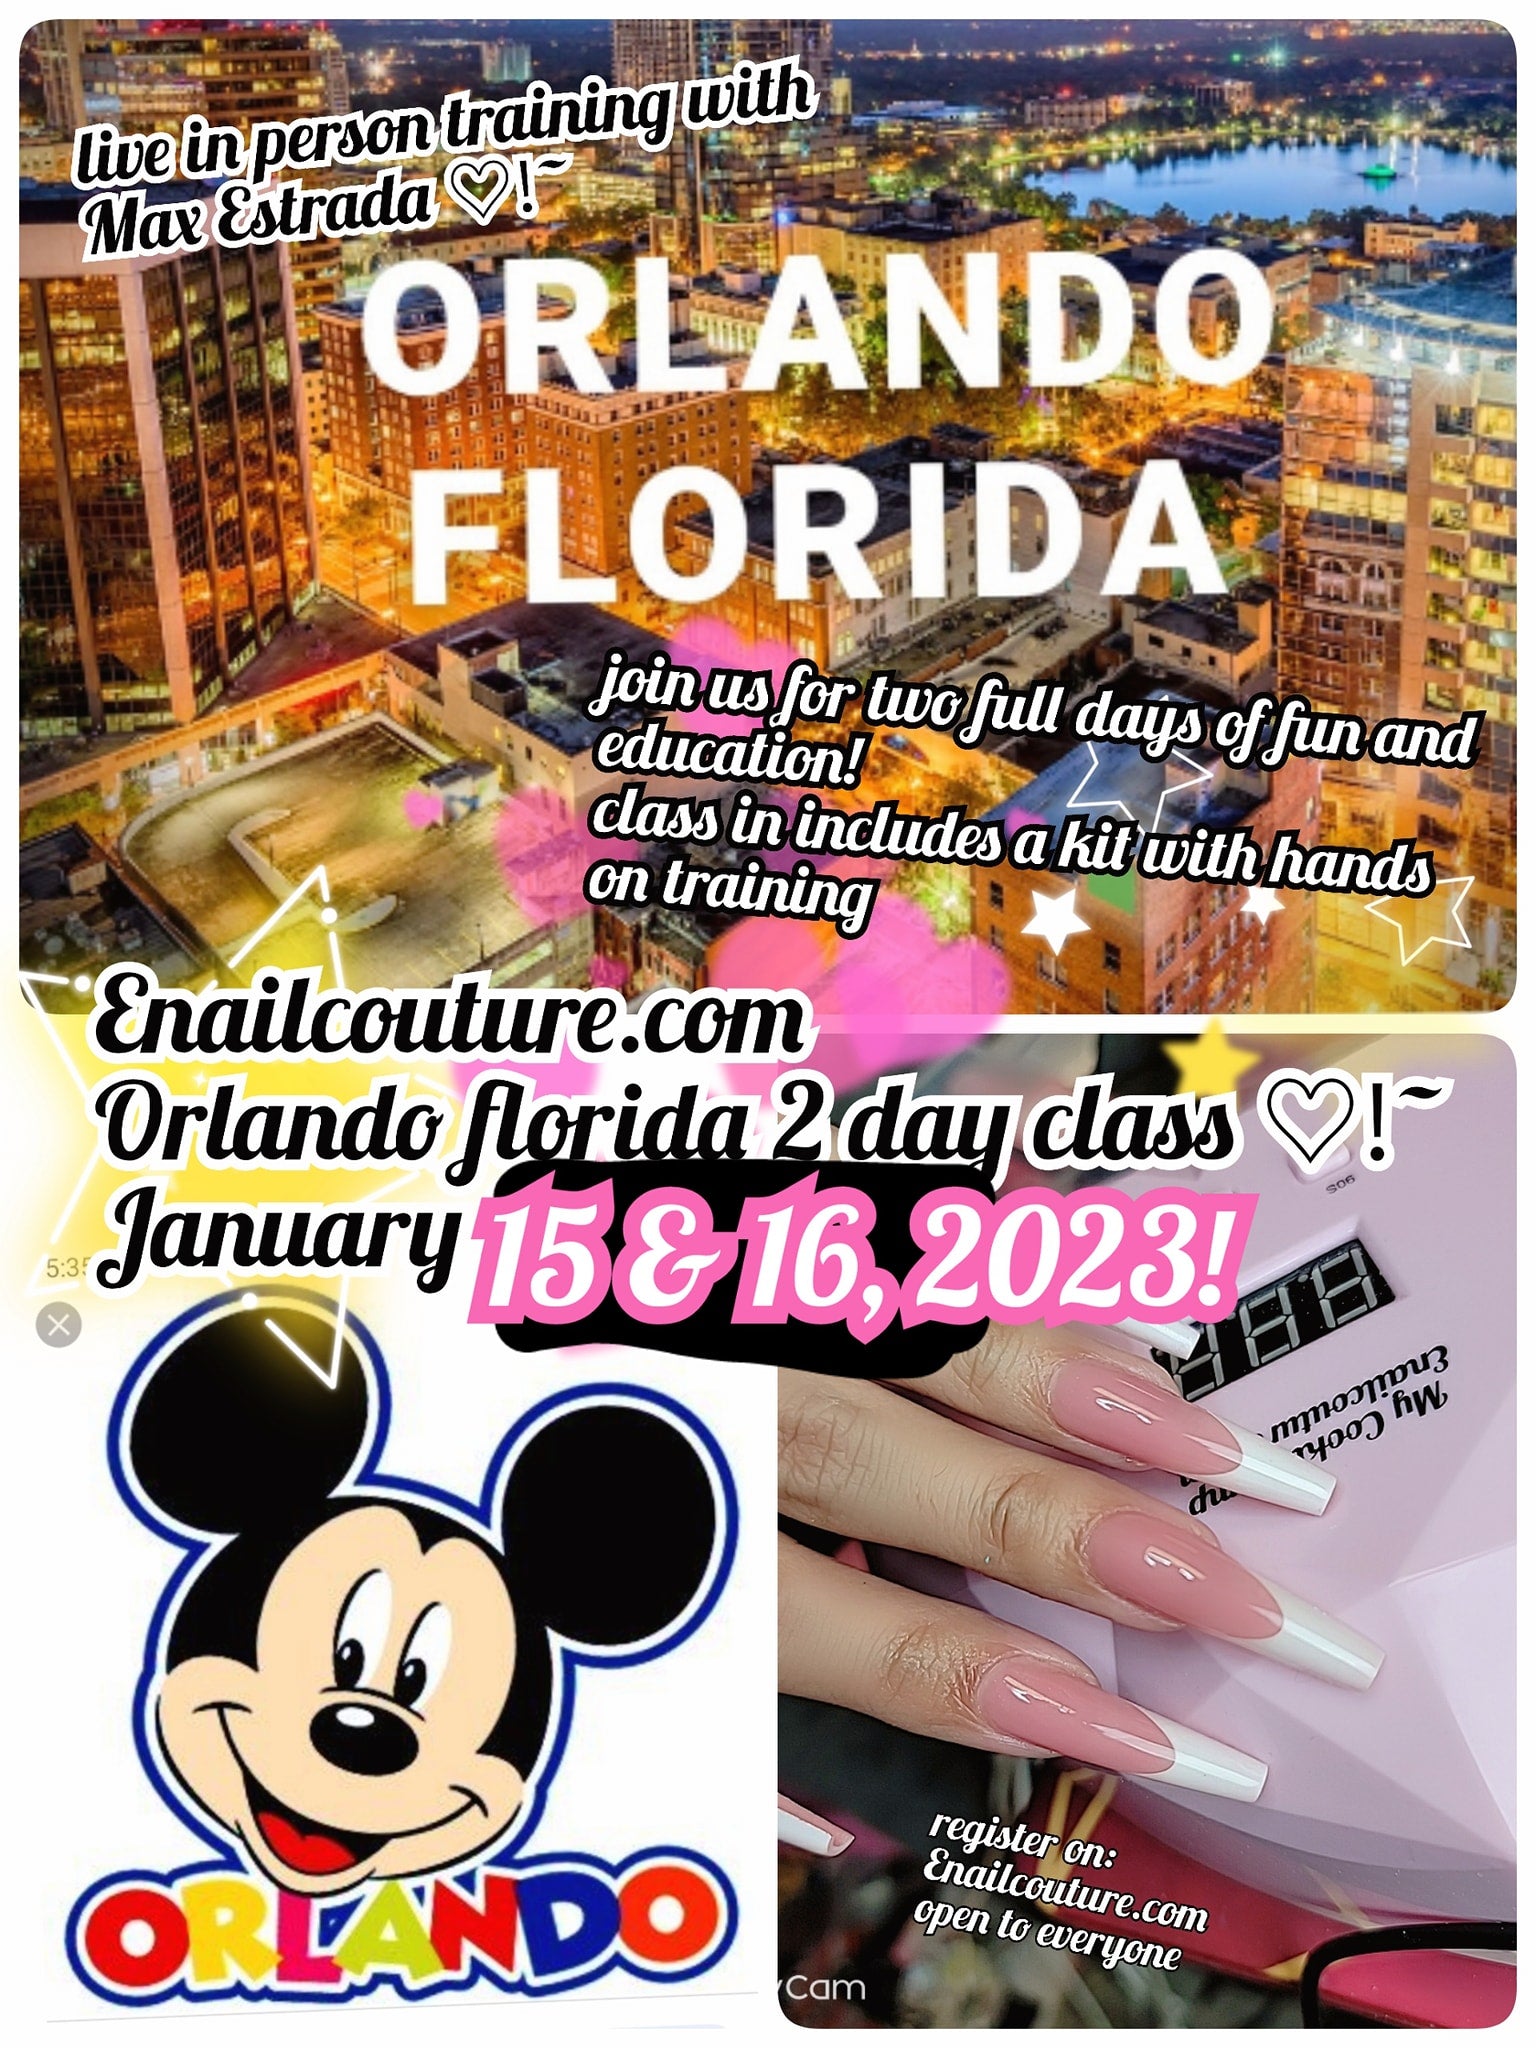 Orlando Florida 2 day nail art festival class !~ January 15&16, 2023 |  enailcouture